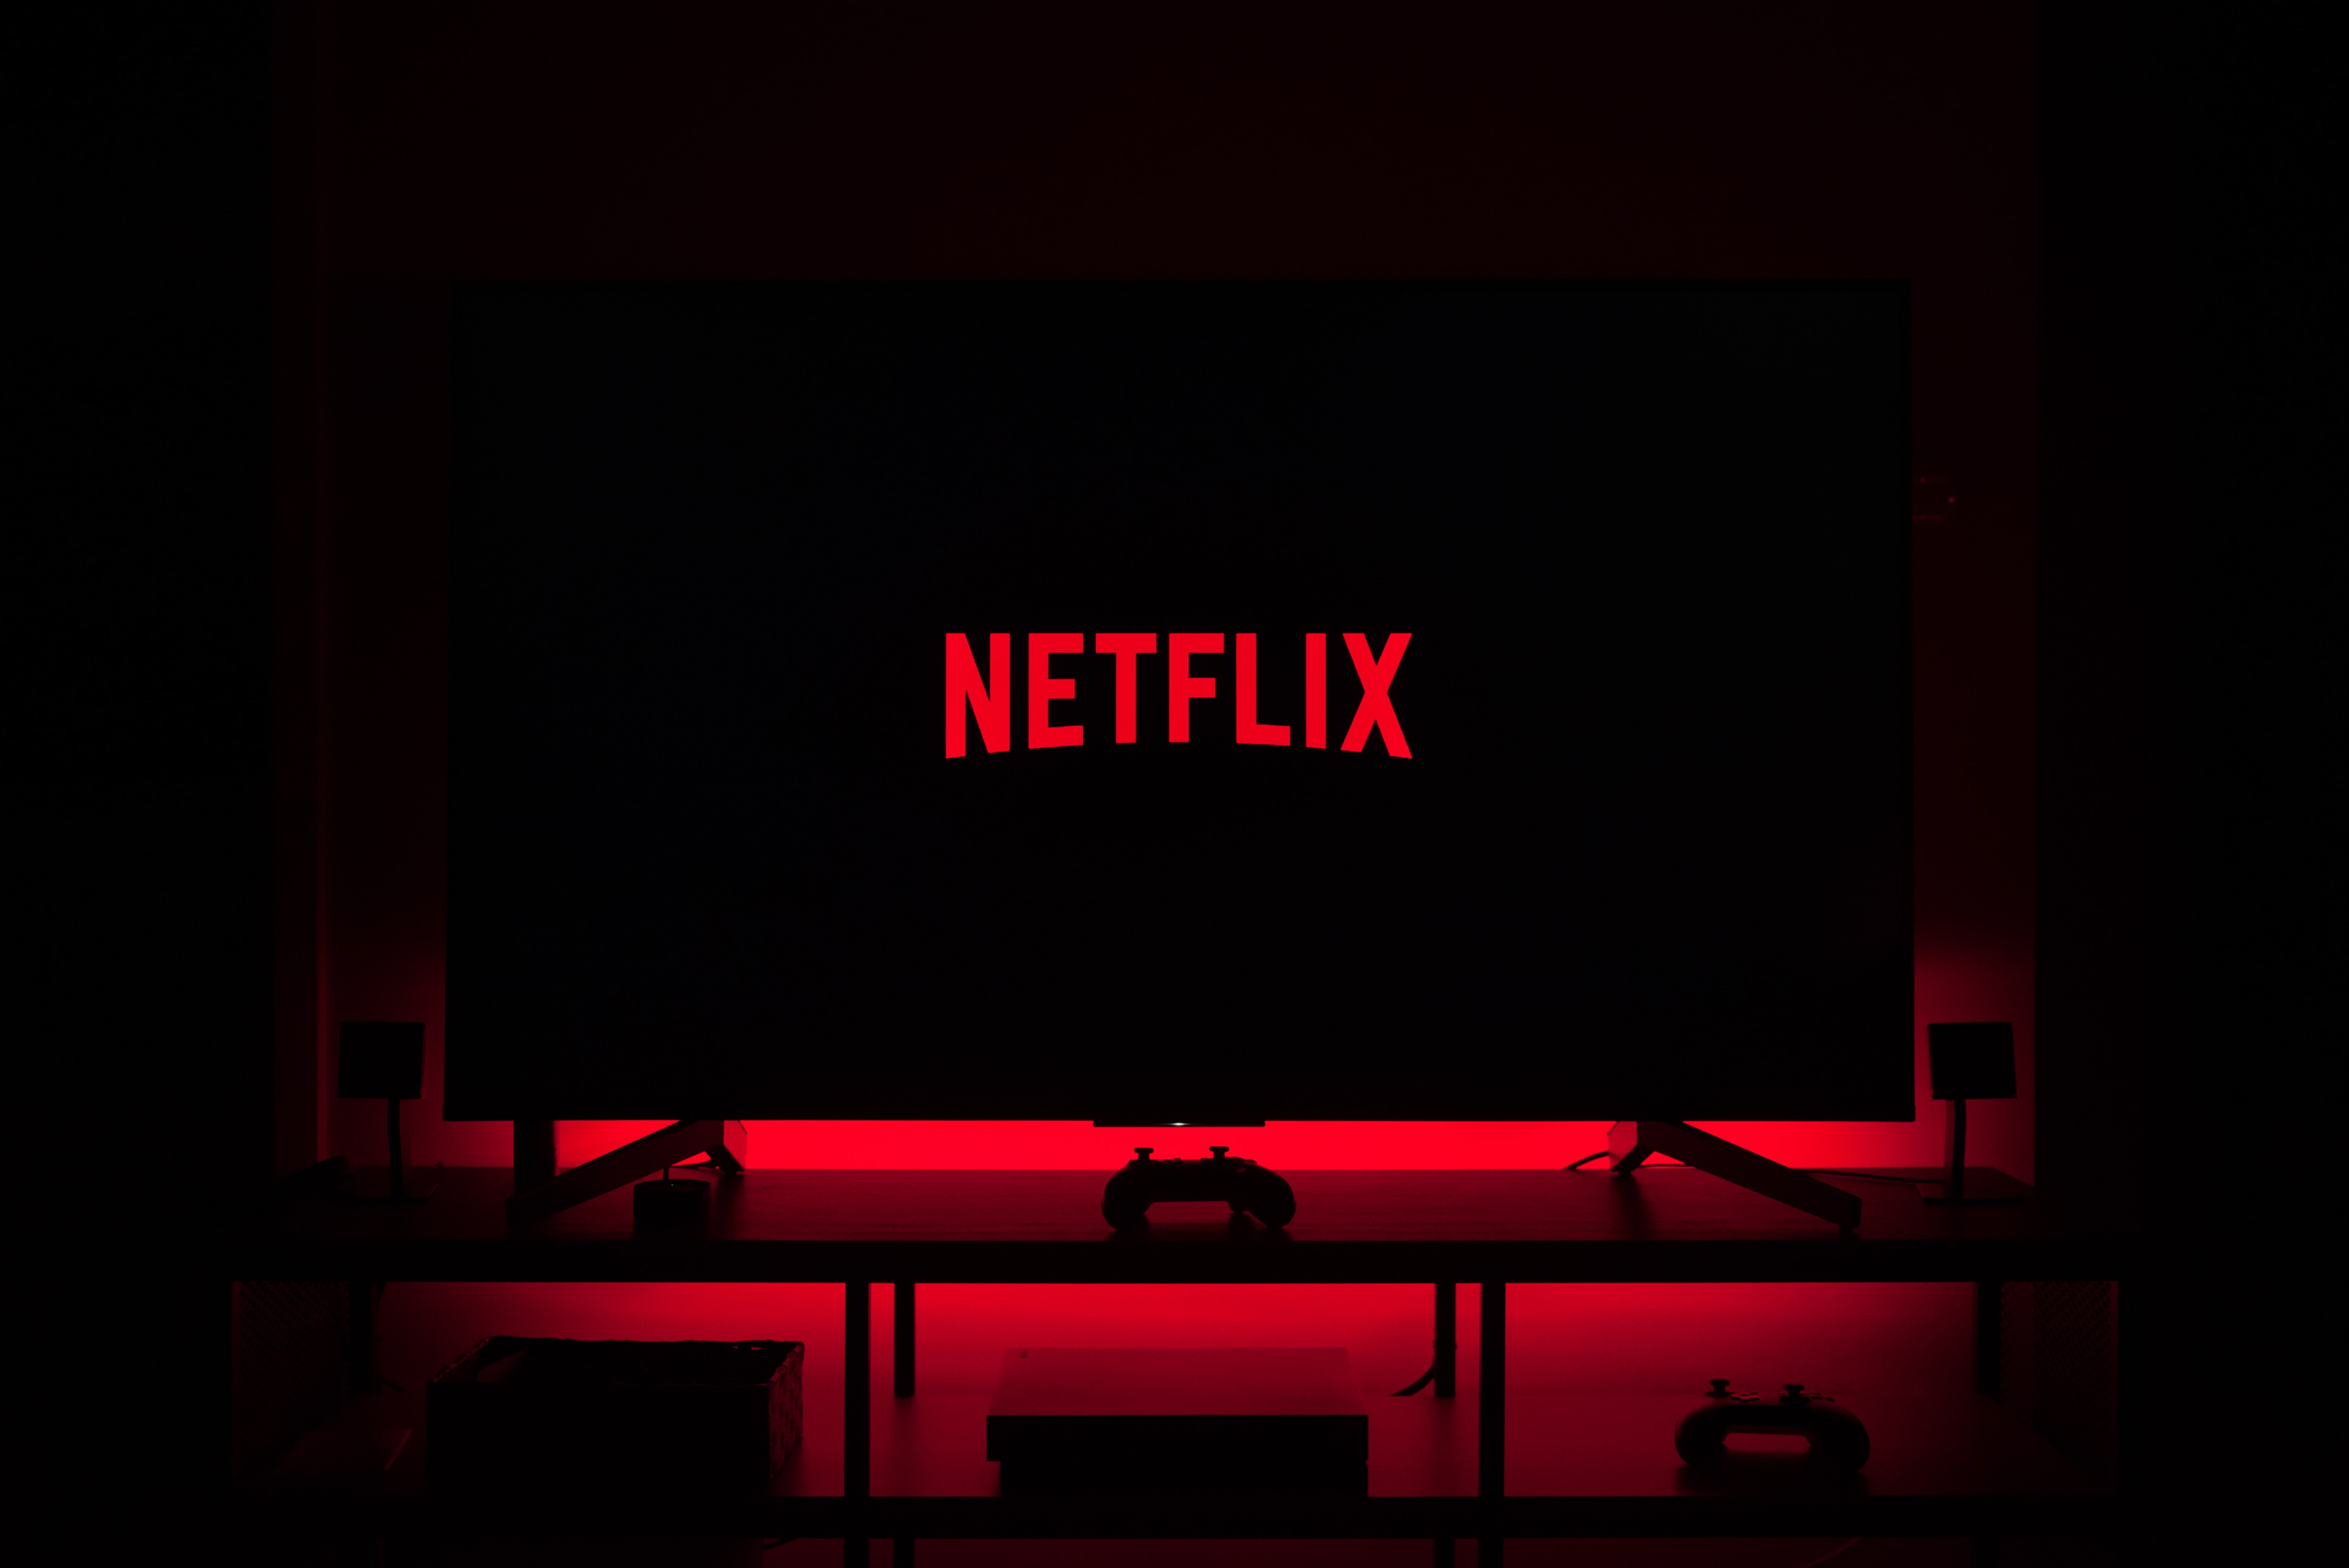 Netflix on Television